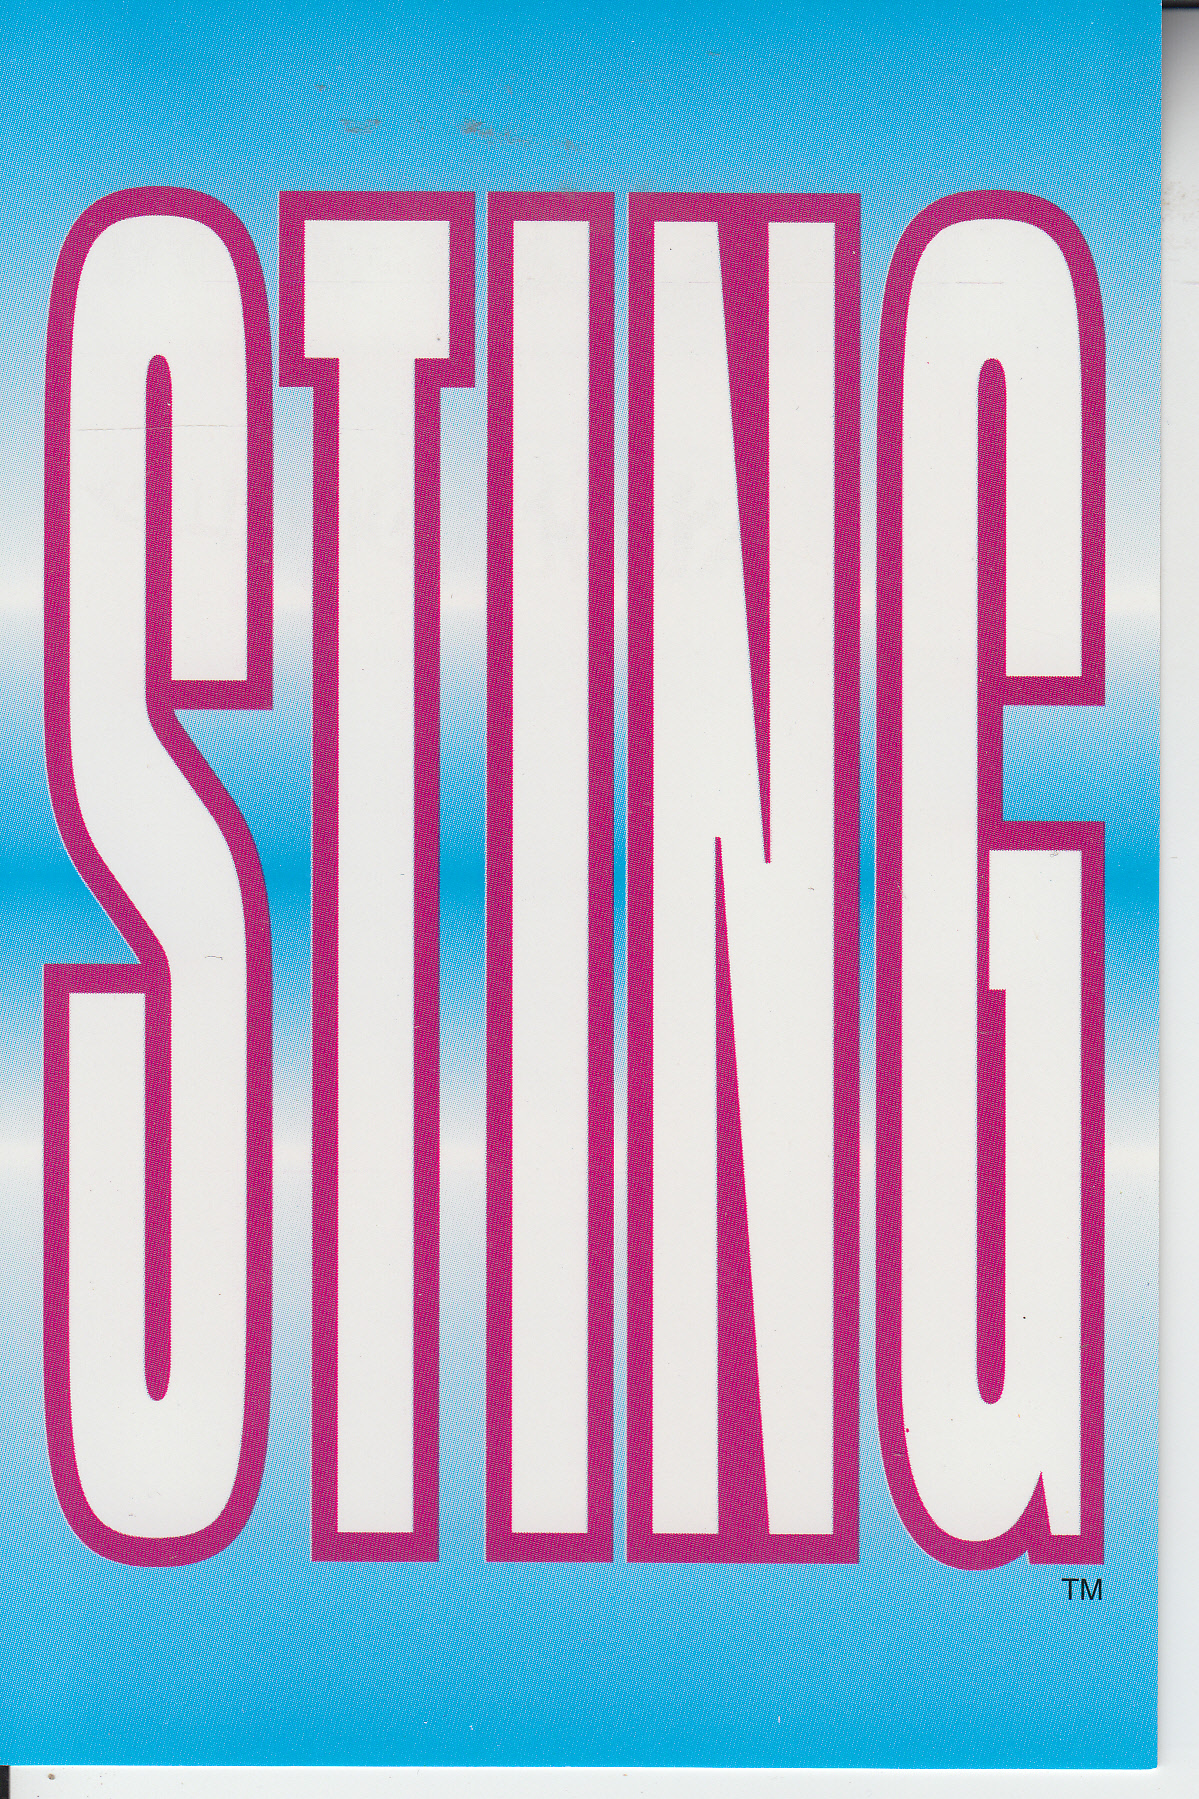 wcw sting logo